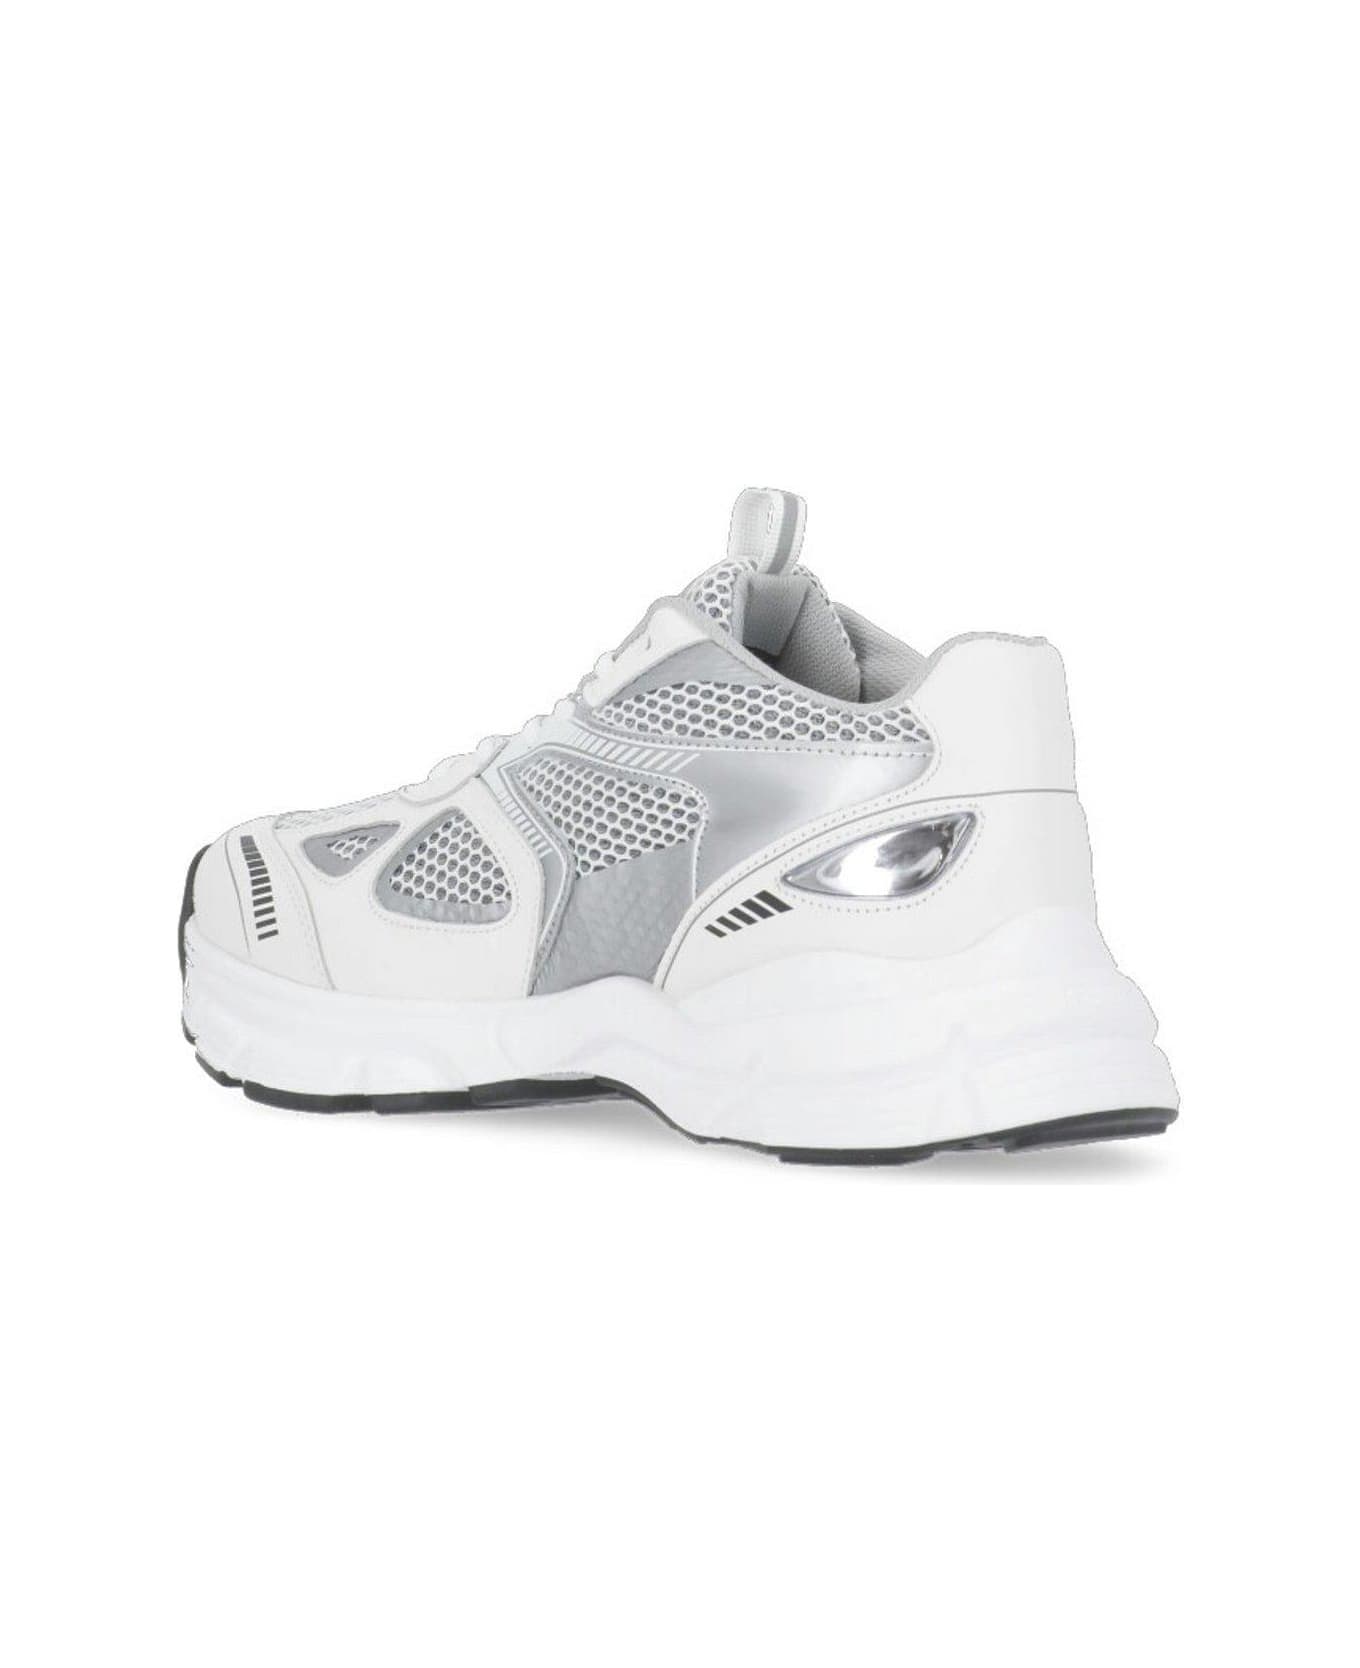 Axel Arigato Marathon Runner Sneakers - WHITE/SILVER